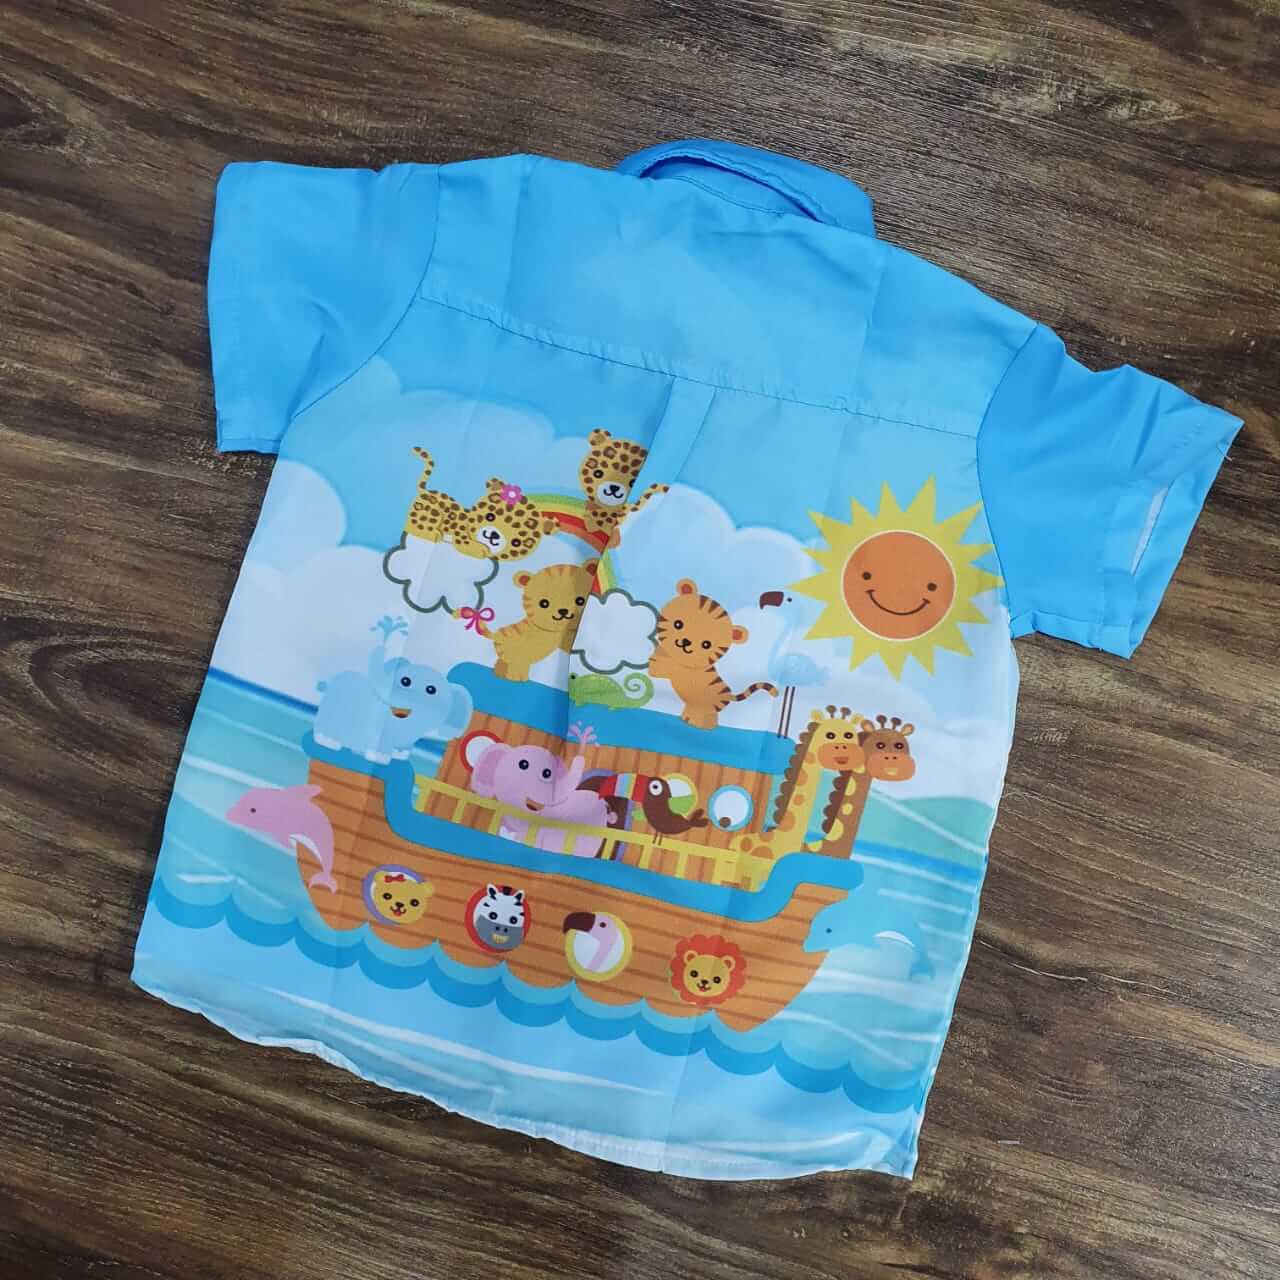 Camisa Social Arca de Noé Infantil